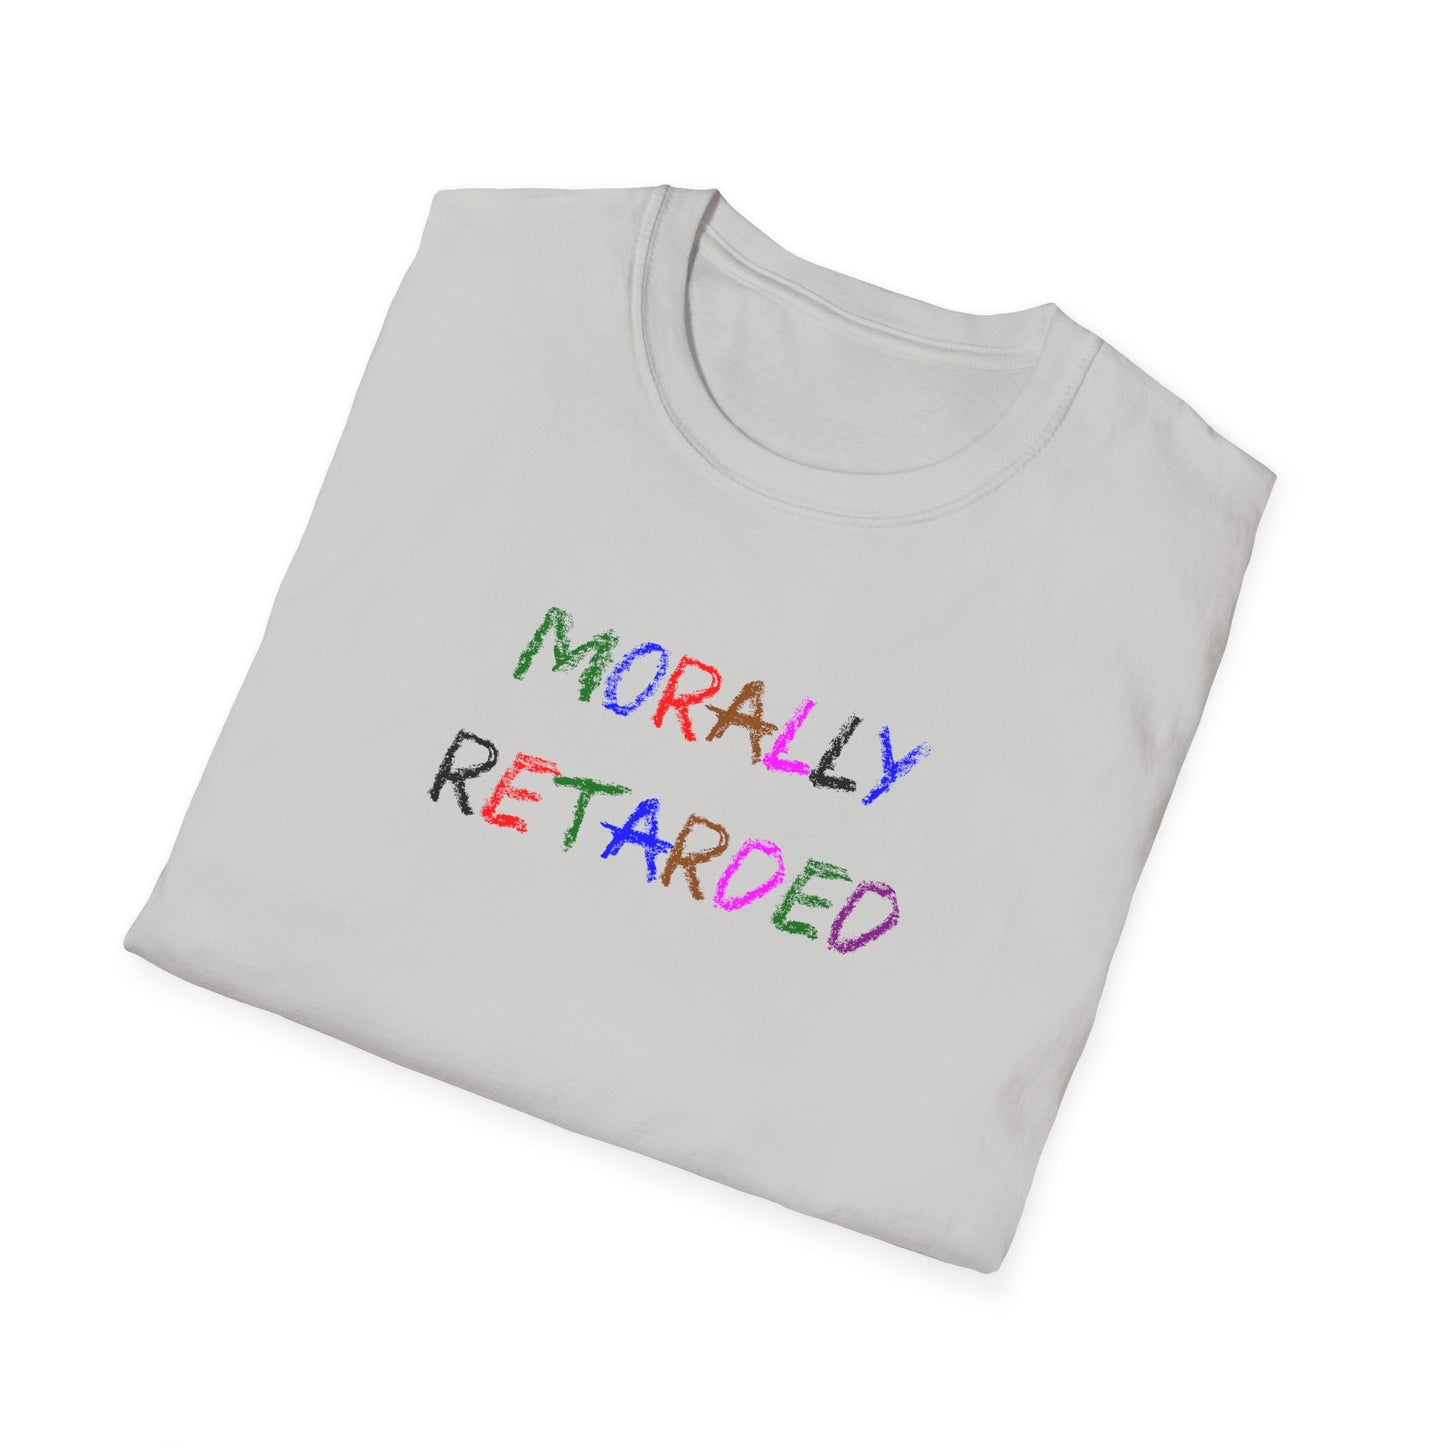 Morally Retarded - T-Shirt